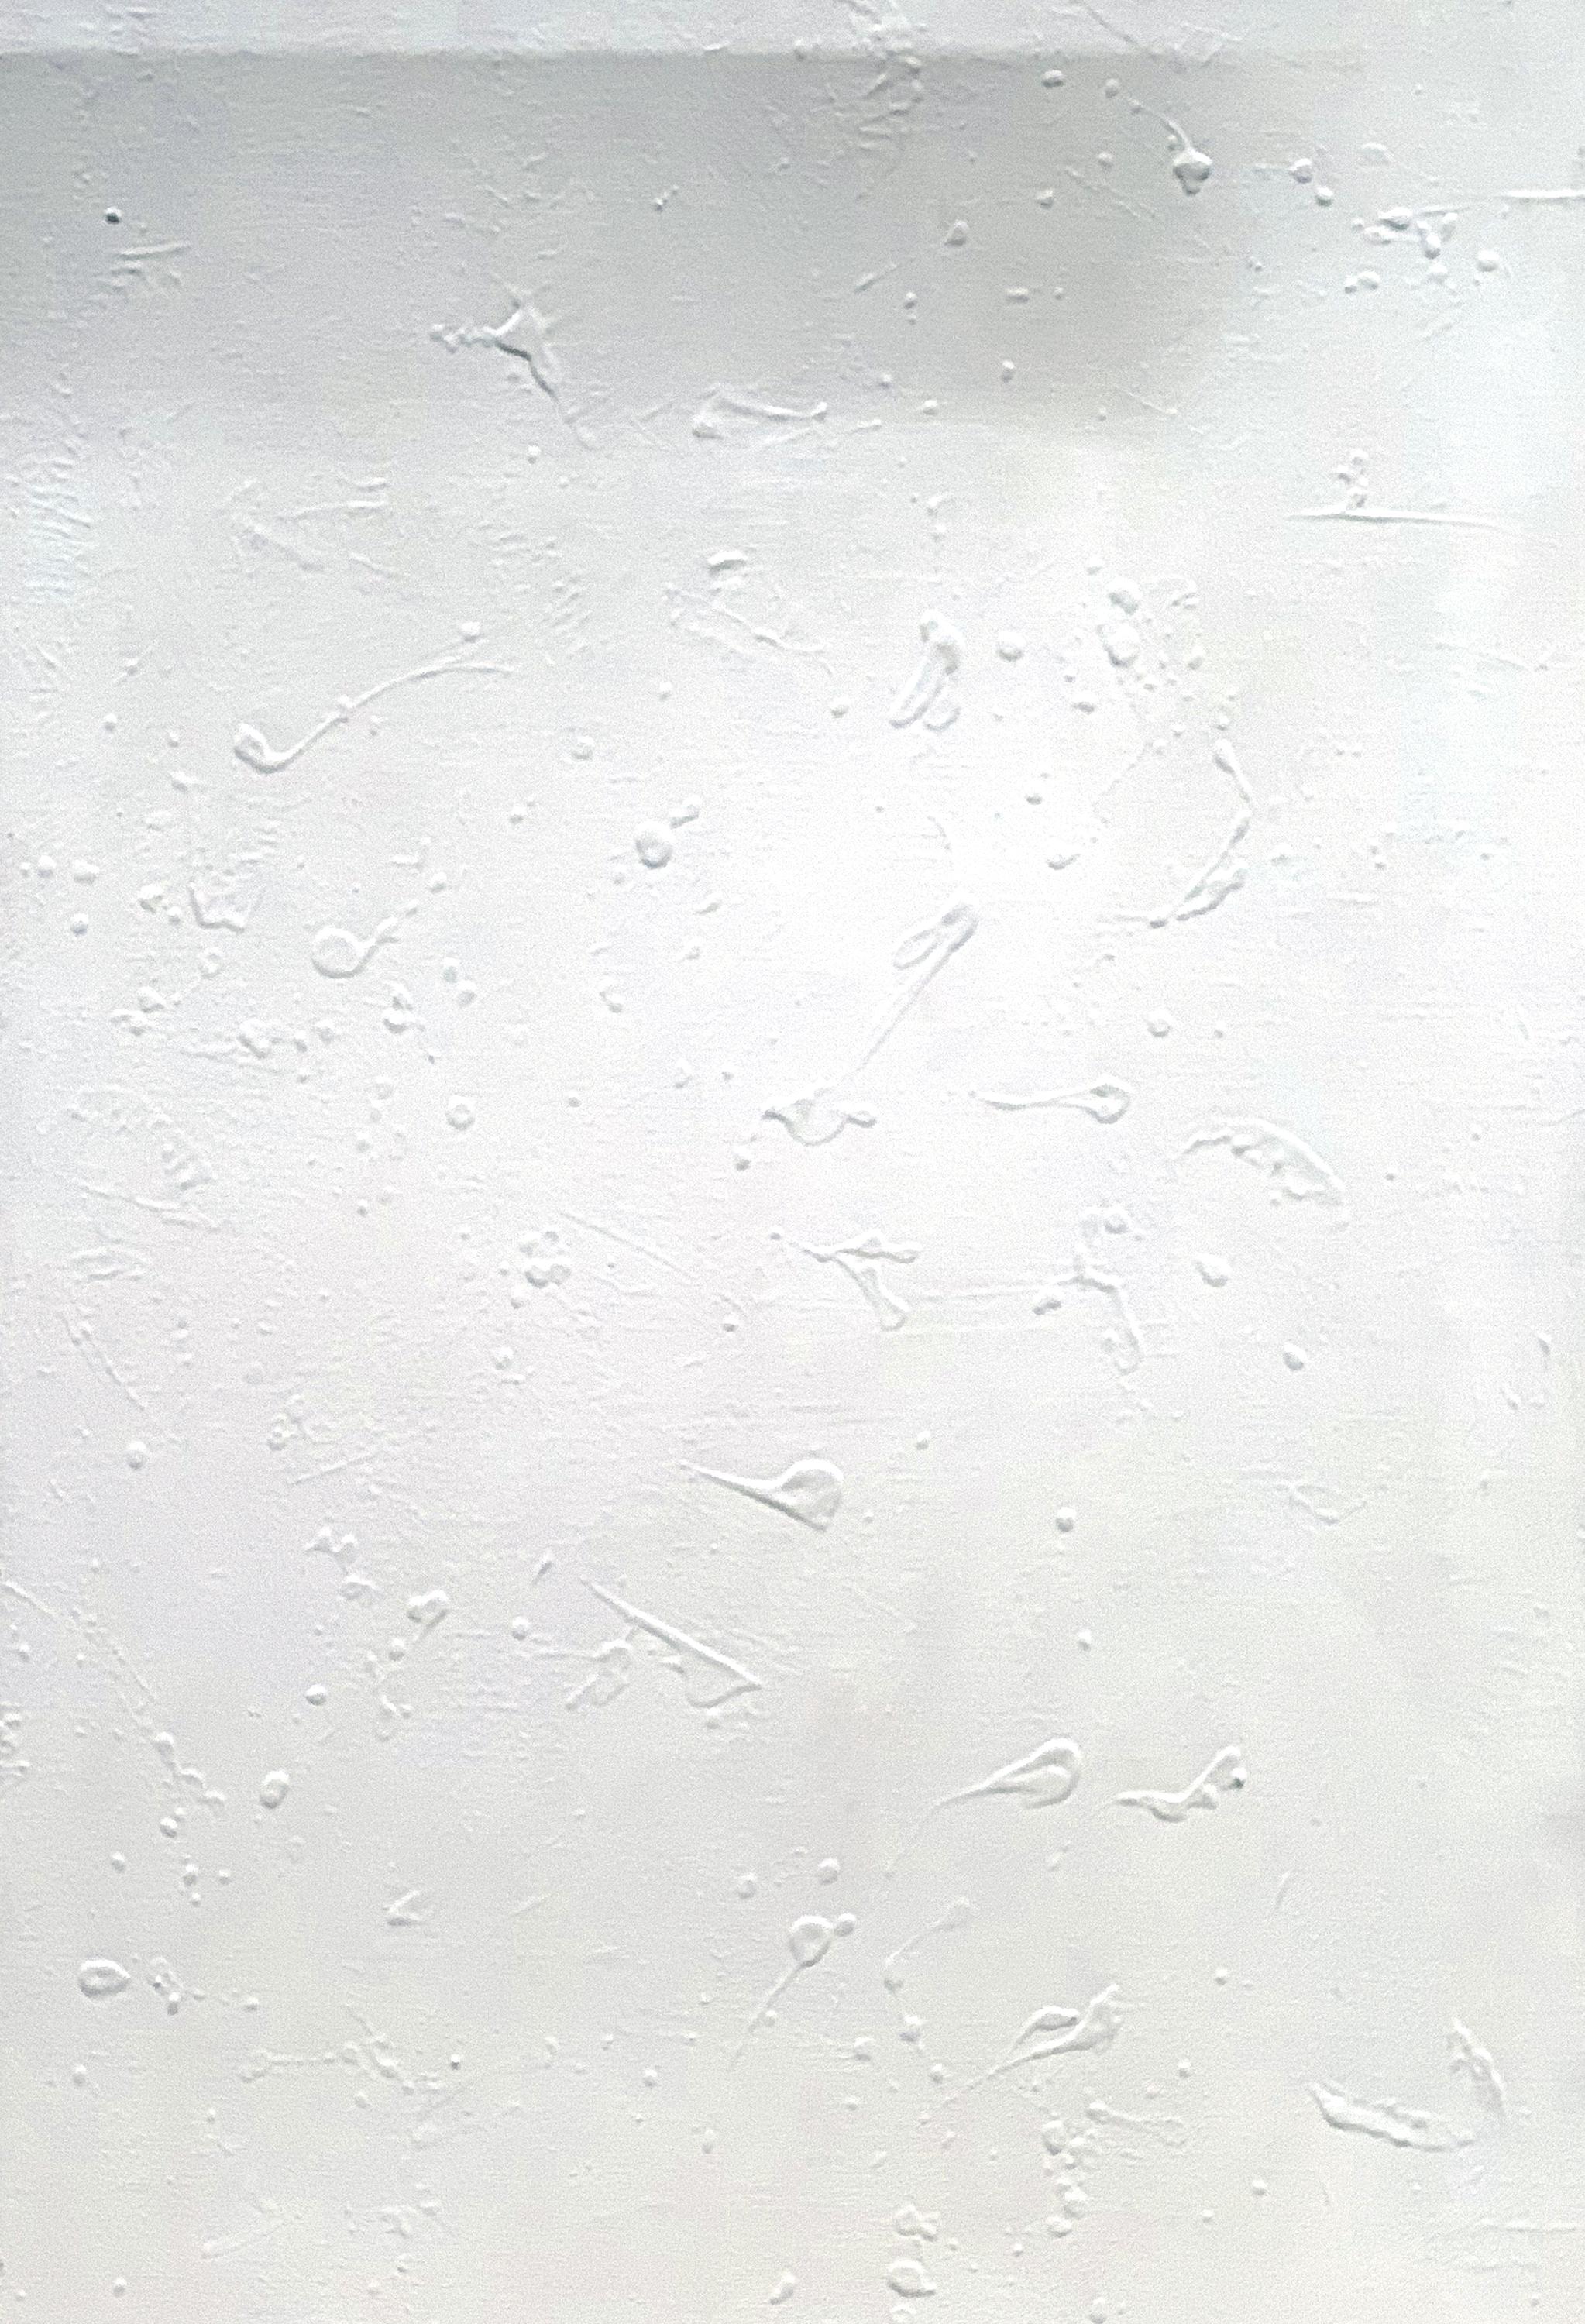 Gelbgelber Submarin (Grau), Landscape Painting, von Chet La More